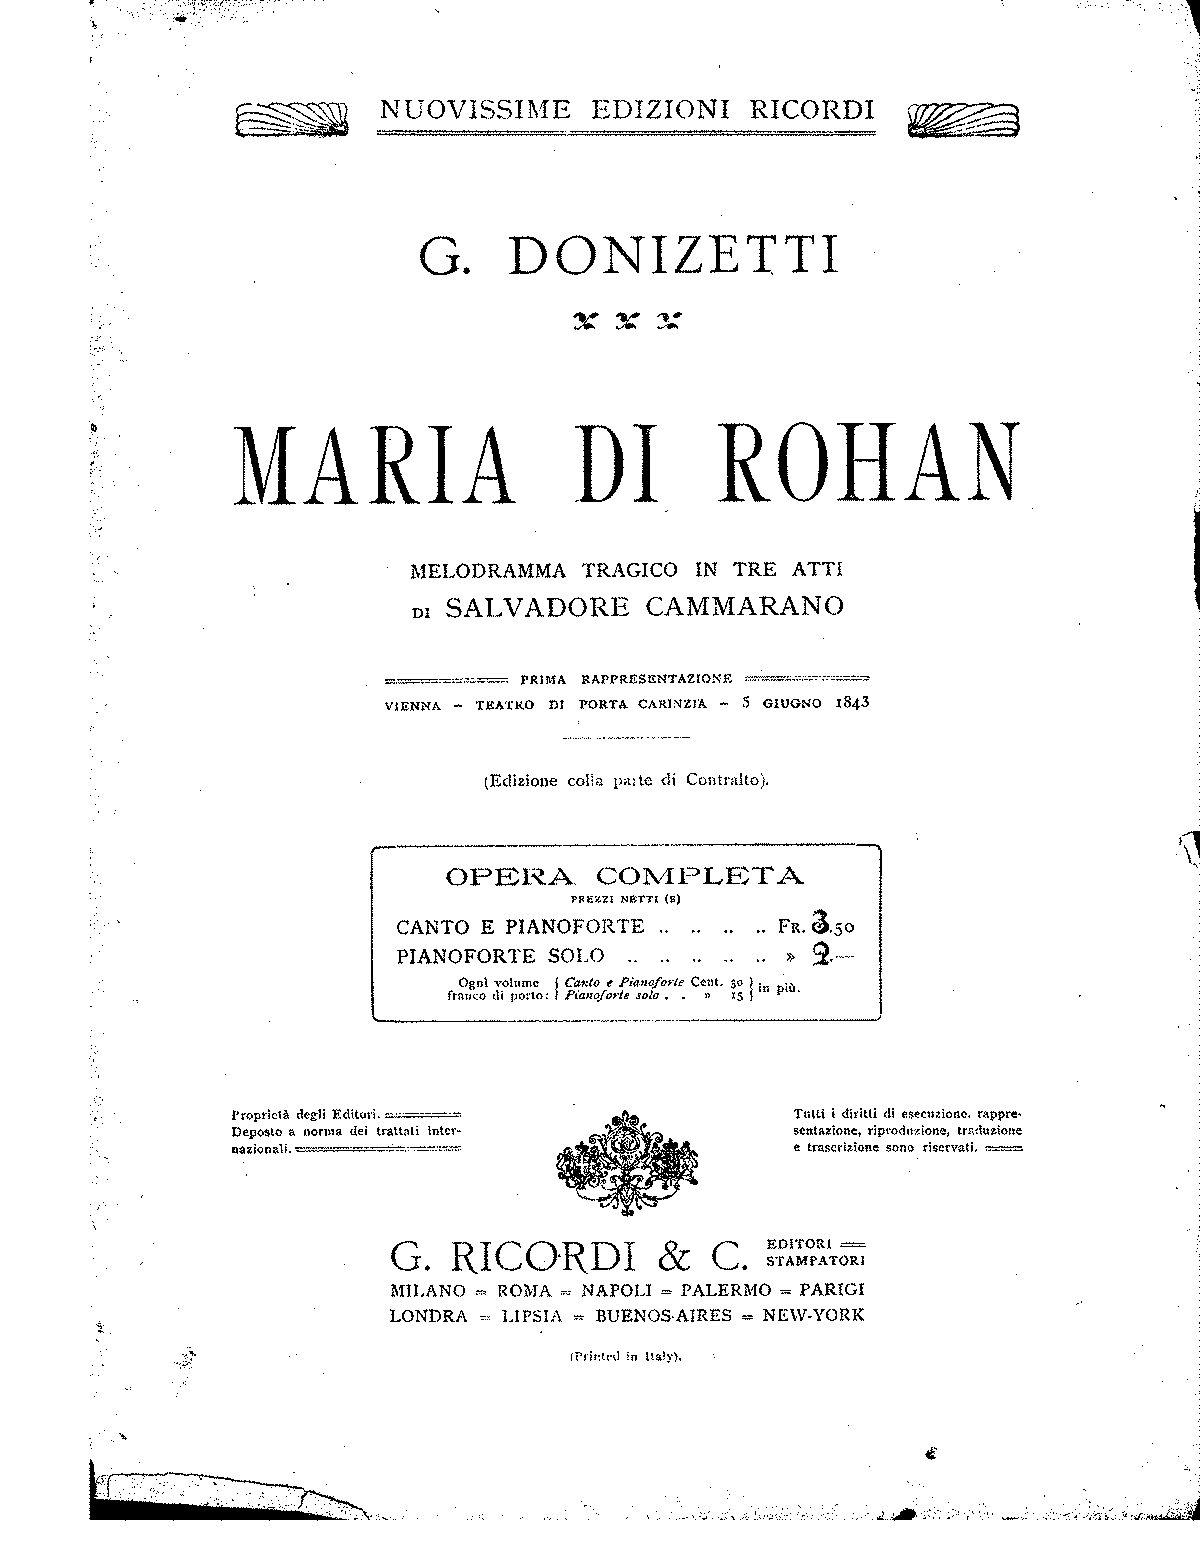 Maria di Rohan (Donizetti, Gaetano) - IMSLP: Free Sheet Music PDF Download